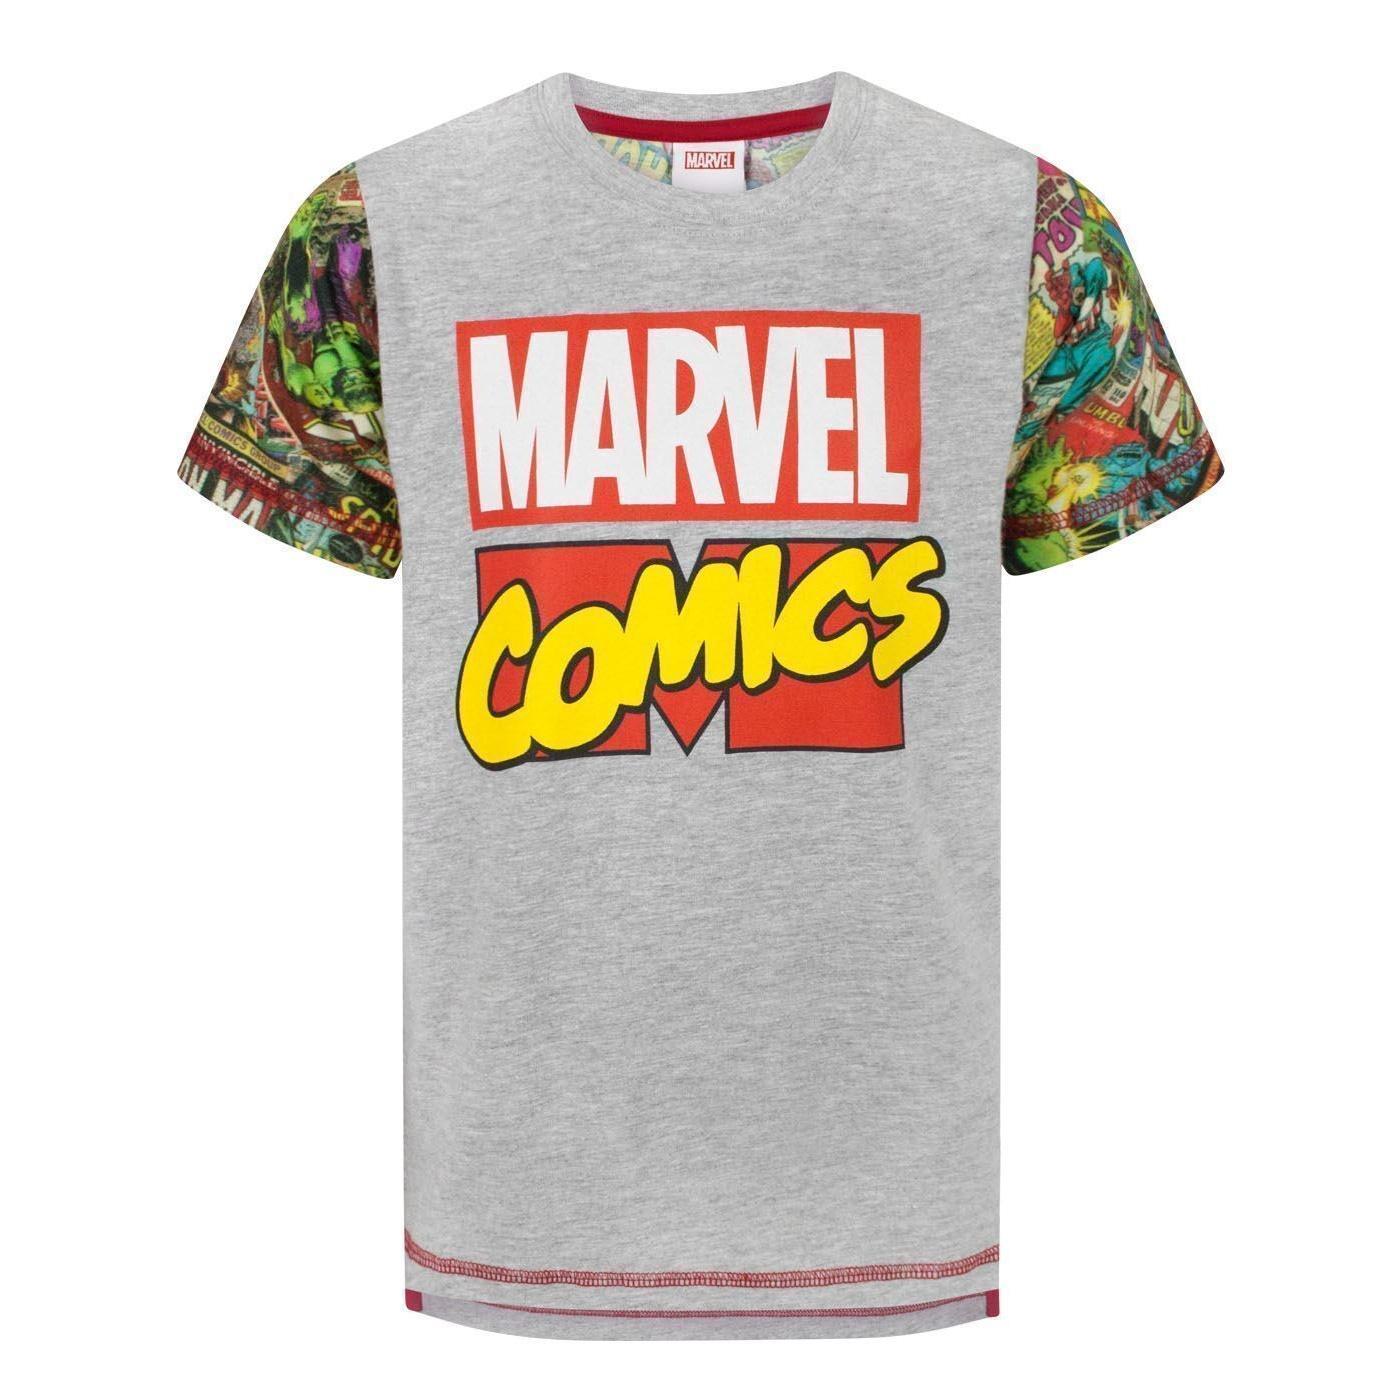 Marvel Comics Boys Printed T-Shirt (Heather Grey/Red/Green) (11-12 Years)